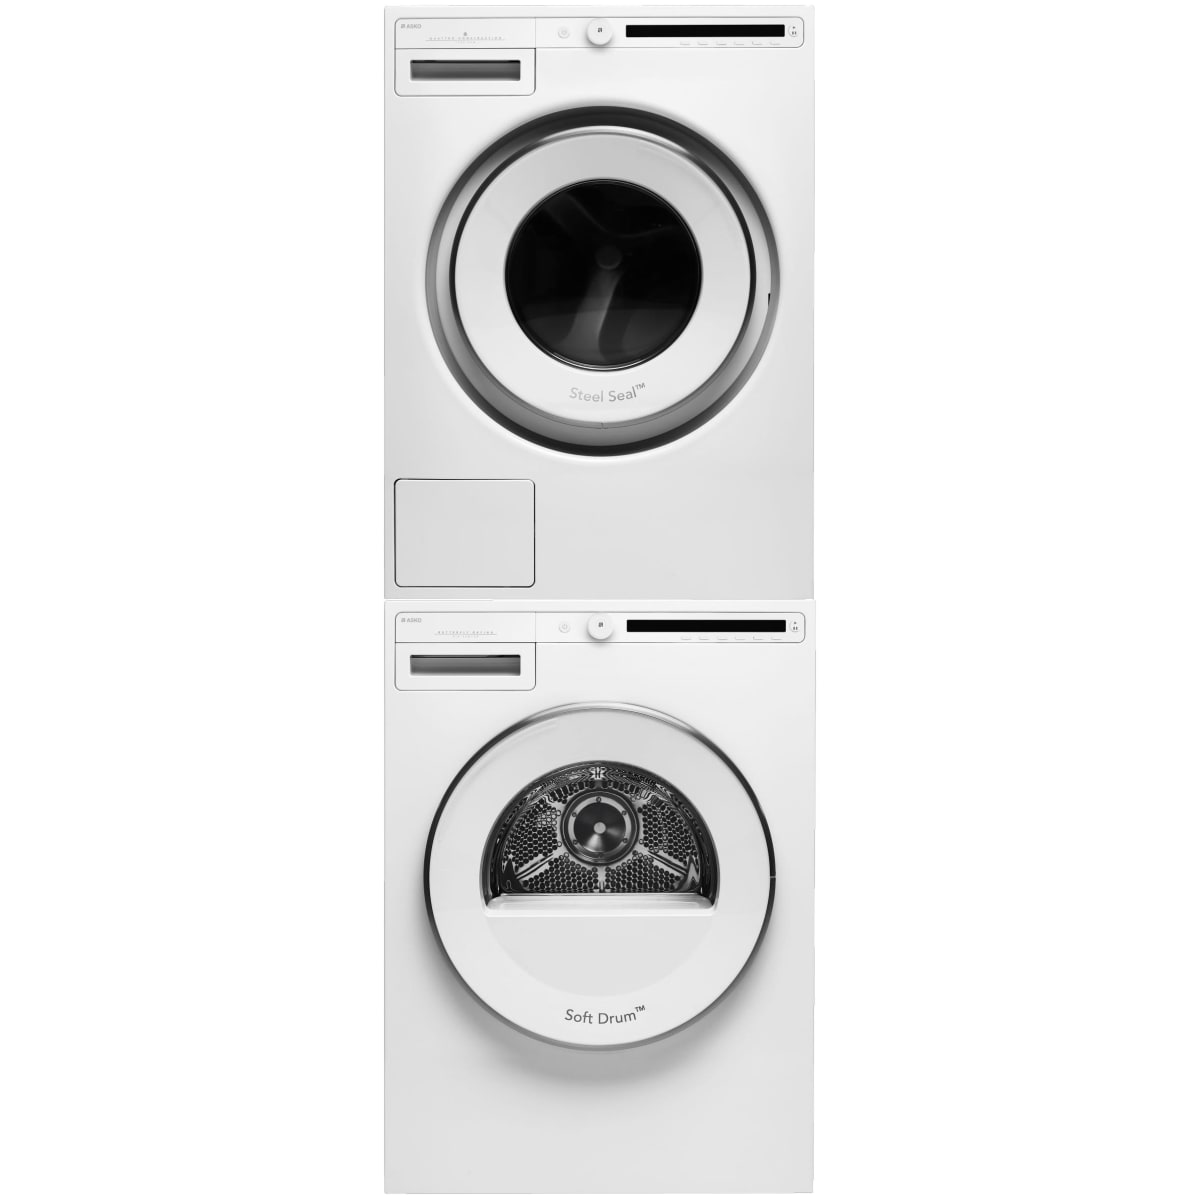 Dryers - High qualtiy tumble dryers from Asko Appliances